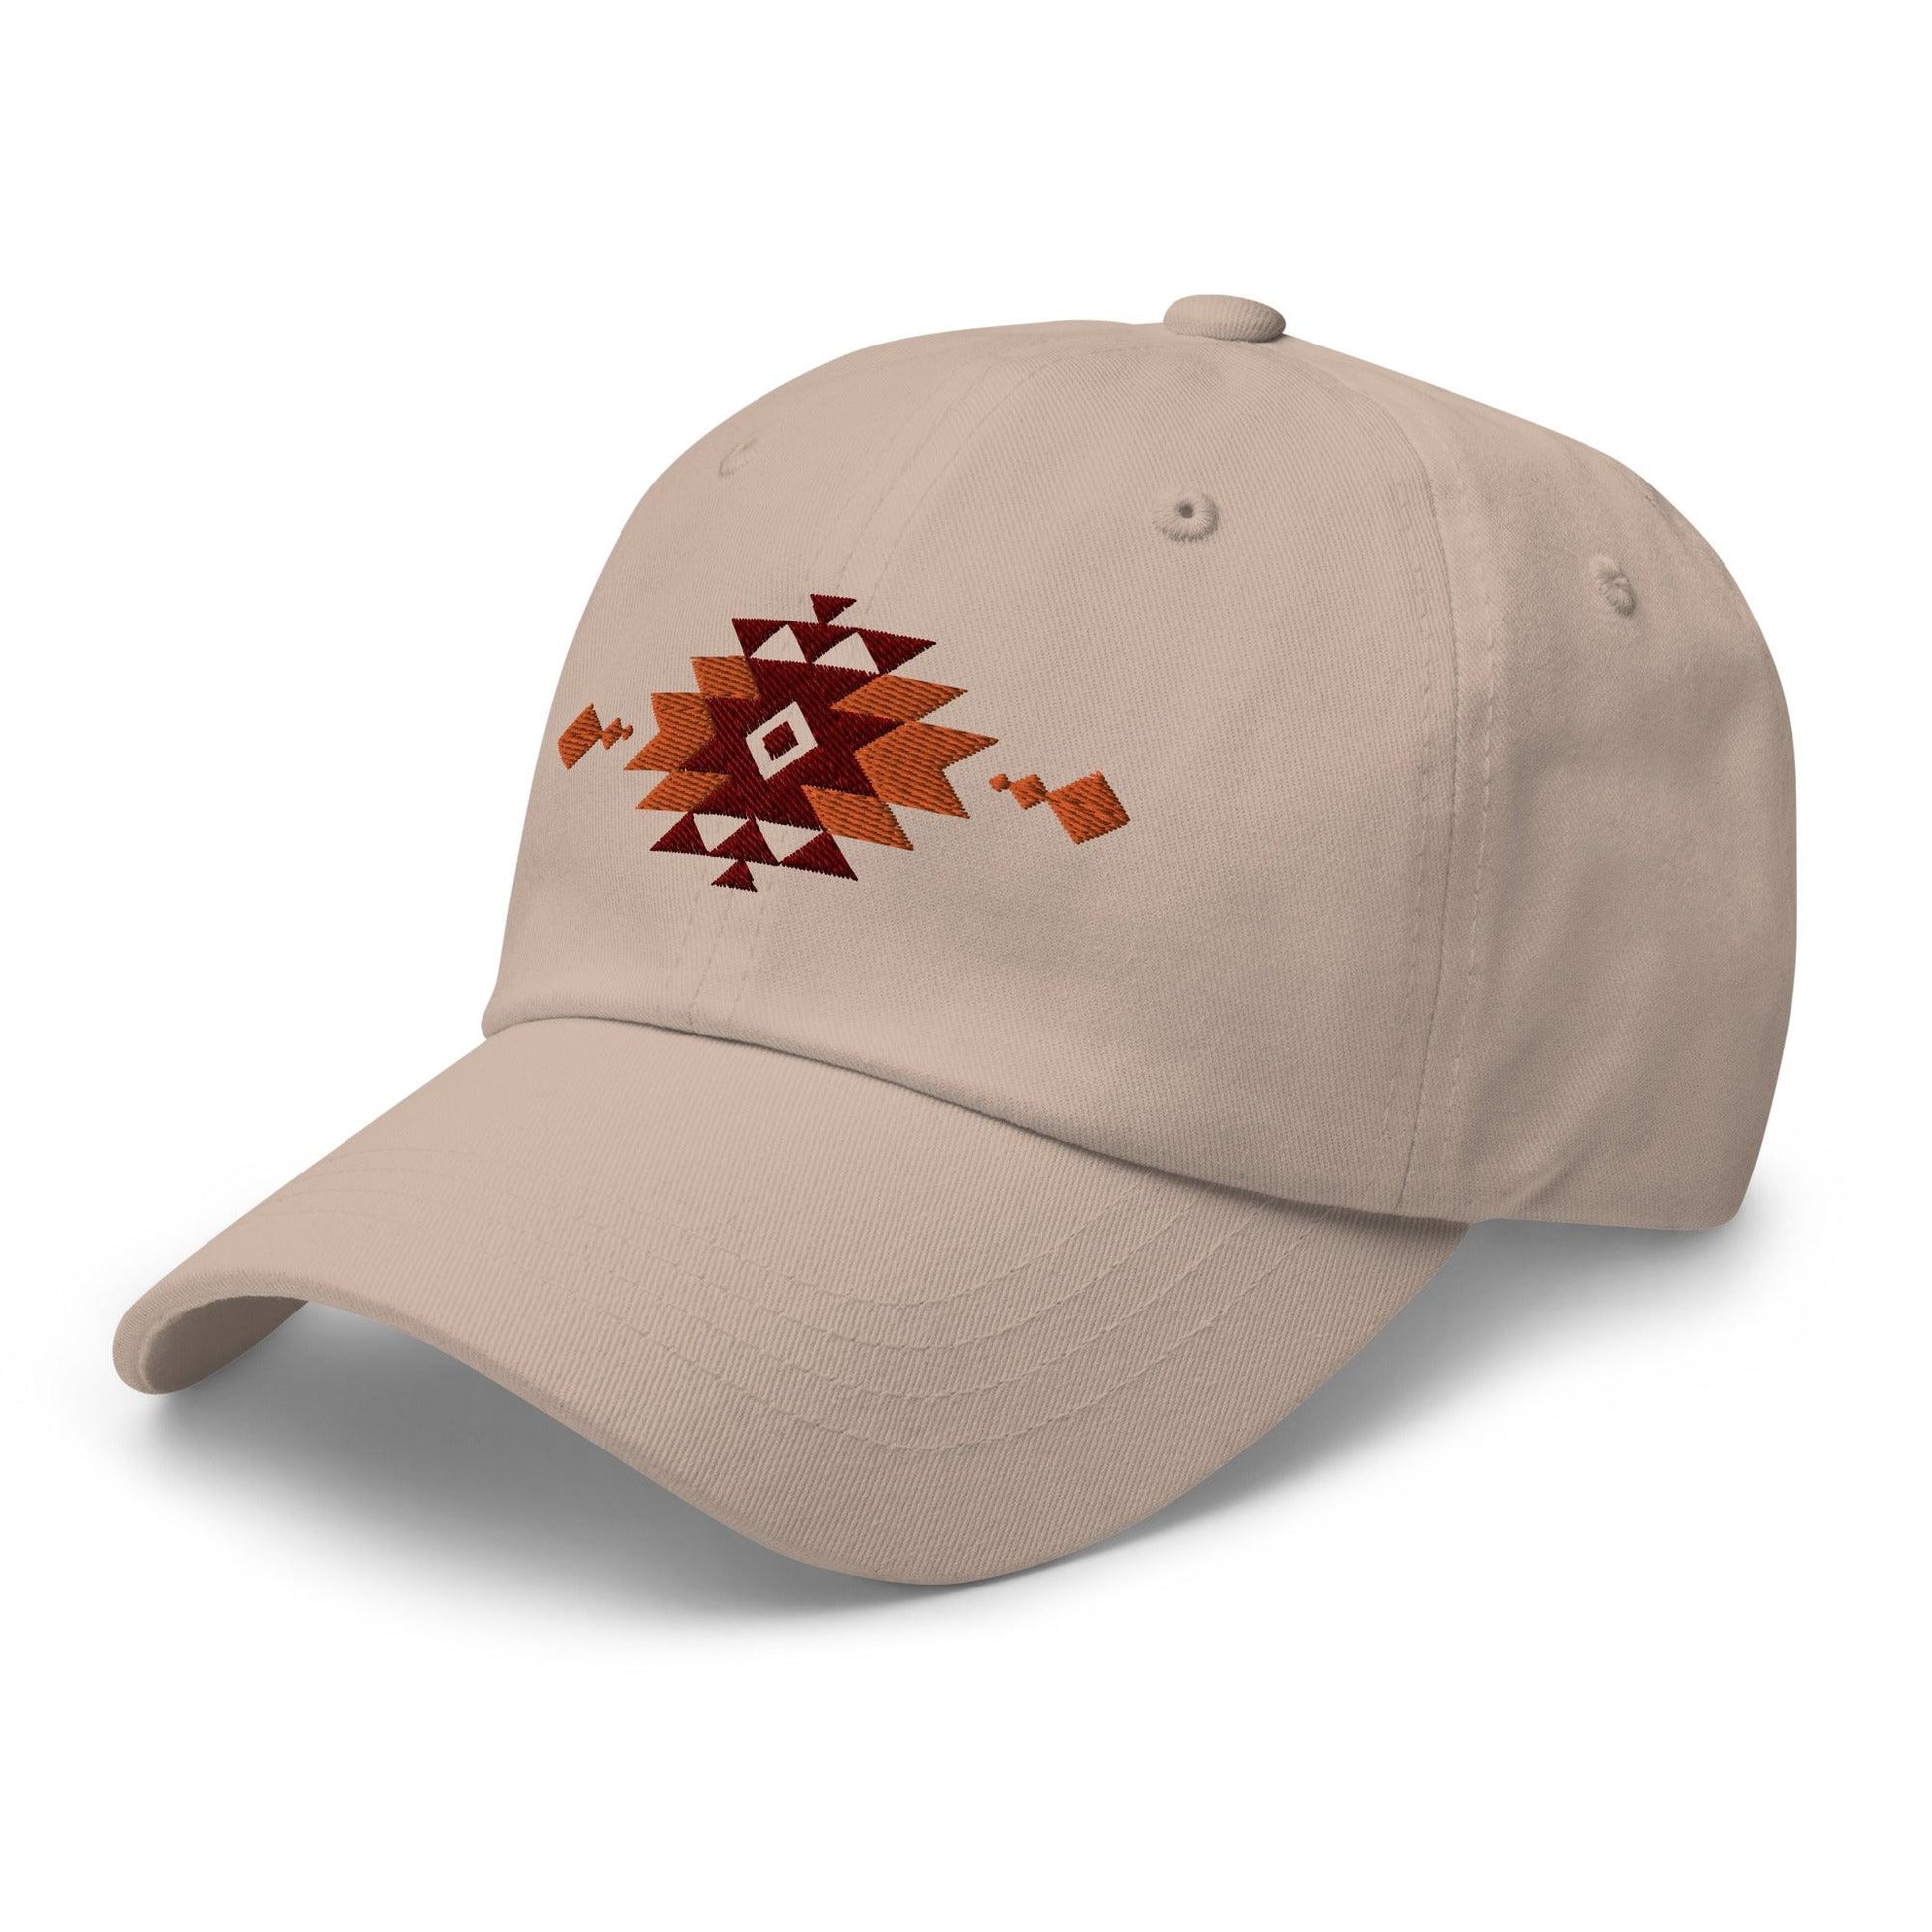 Southwestern Embroidered Dad Hat - The Global Wanderer